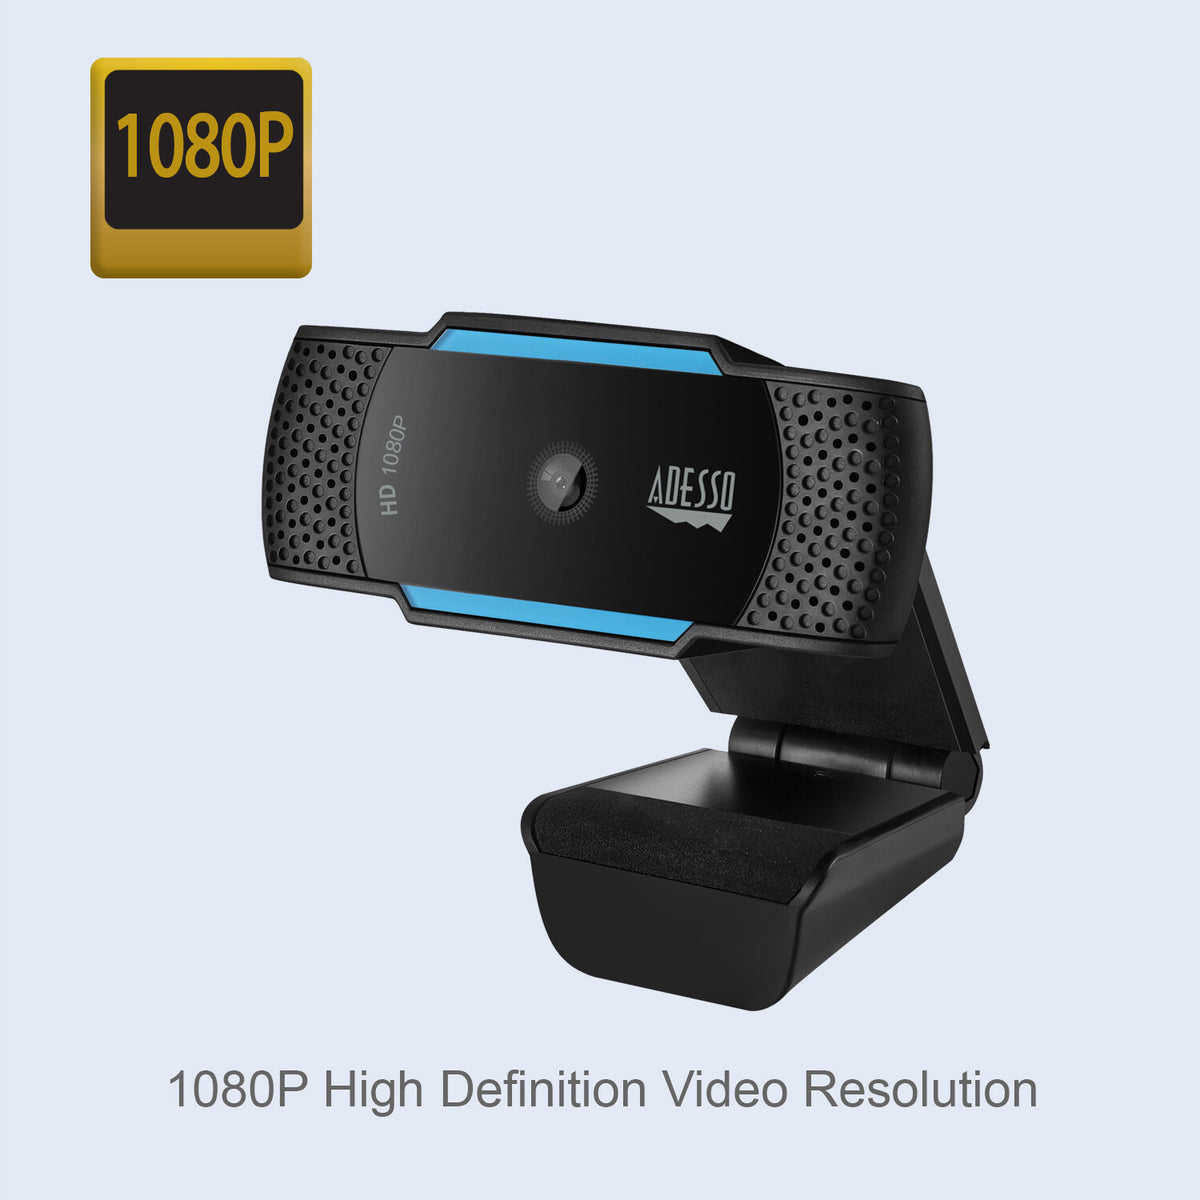 Adesso CyberTrack H5 - 2.1 MP 1920 x 1080 pixels USB 2.0 webcam